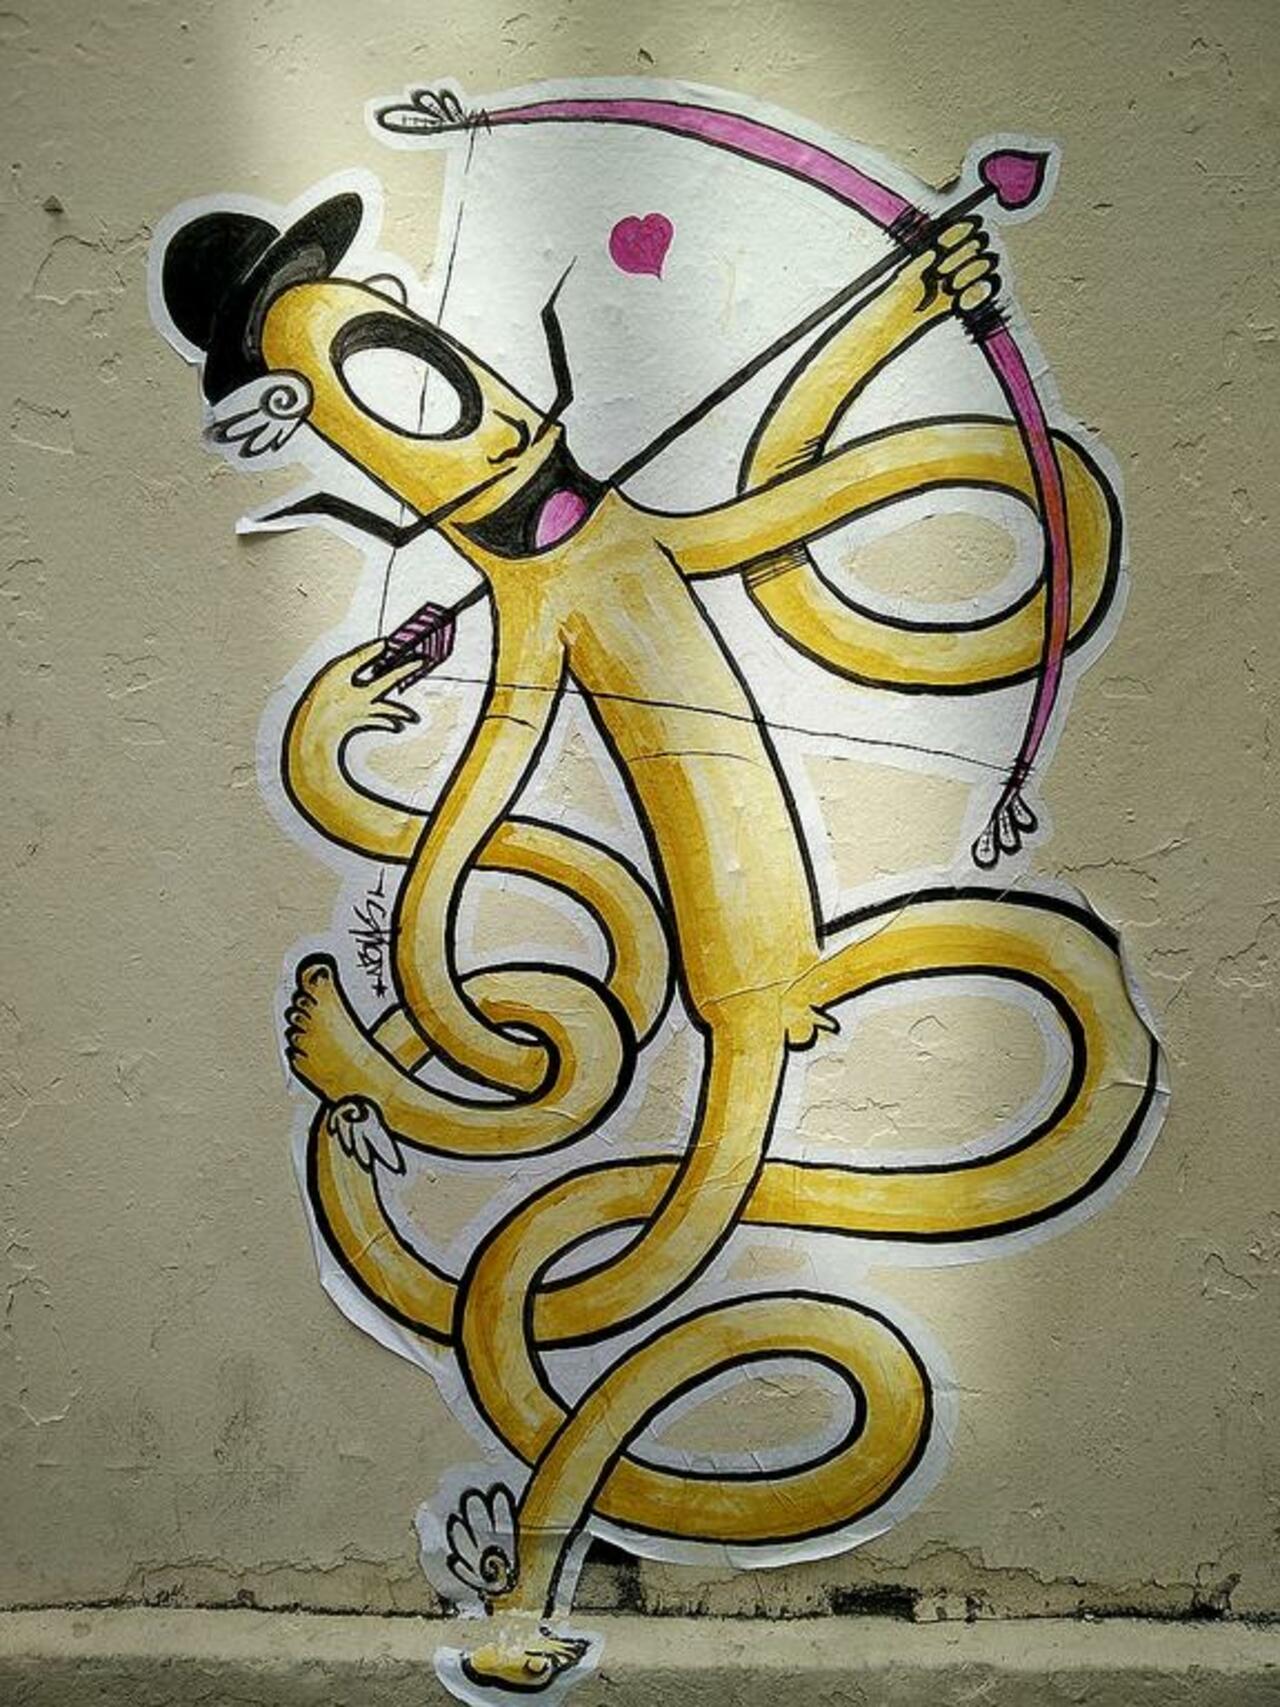 Street Art by anonymous in #Lyon http://www.urbacolors.com #art #mural #graffiti #streetart http://t.co/VUlUaO3hO3